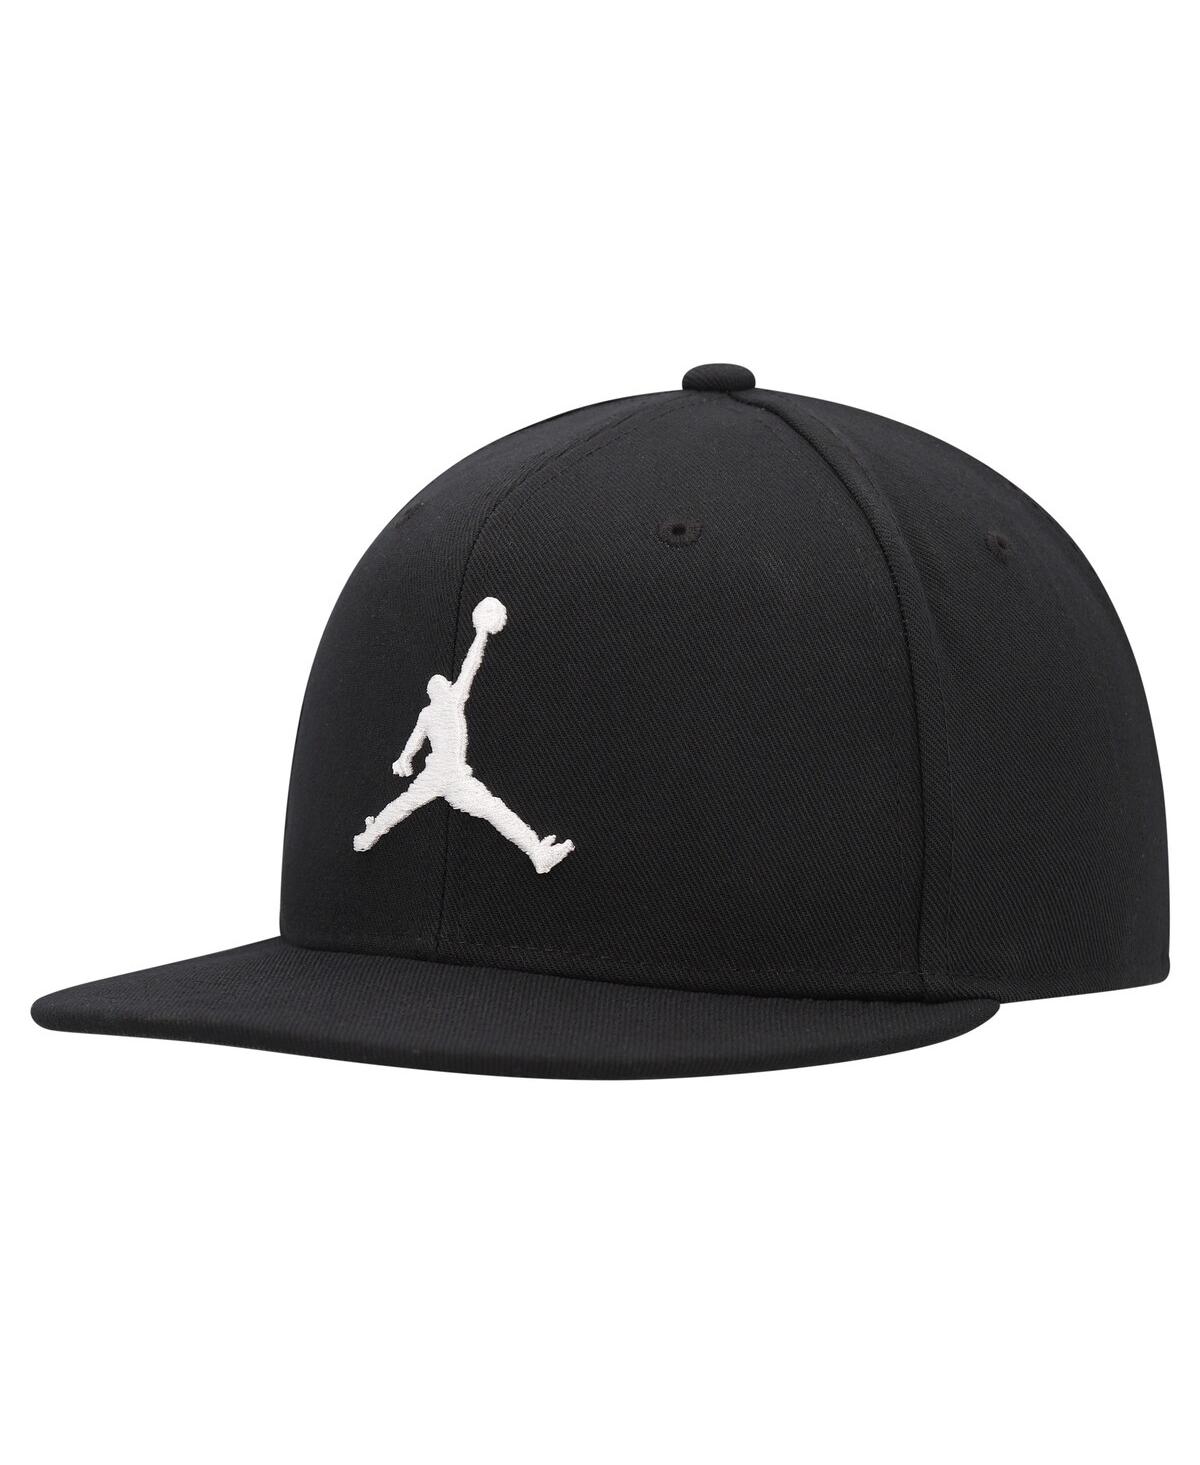 Men's Jordan Black Pro Jumpman Snapback Hat - Black